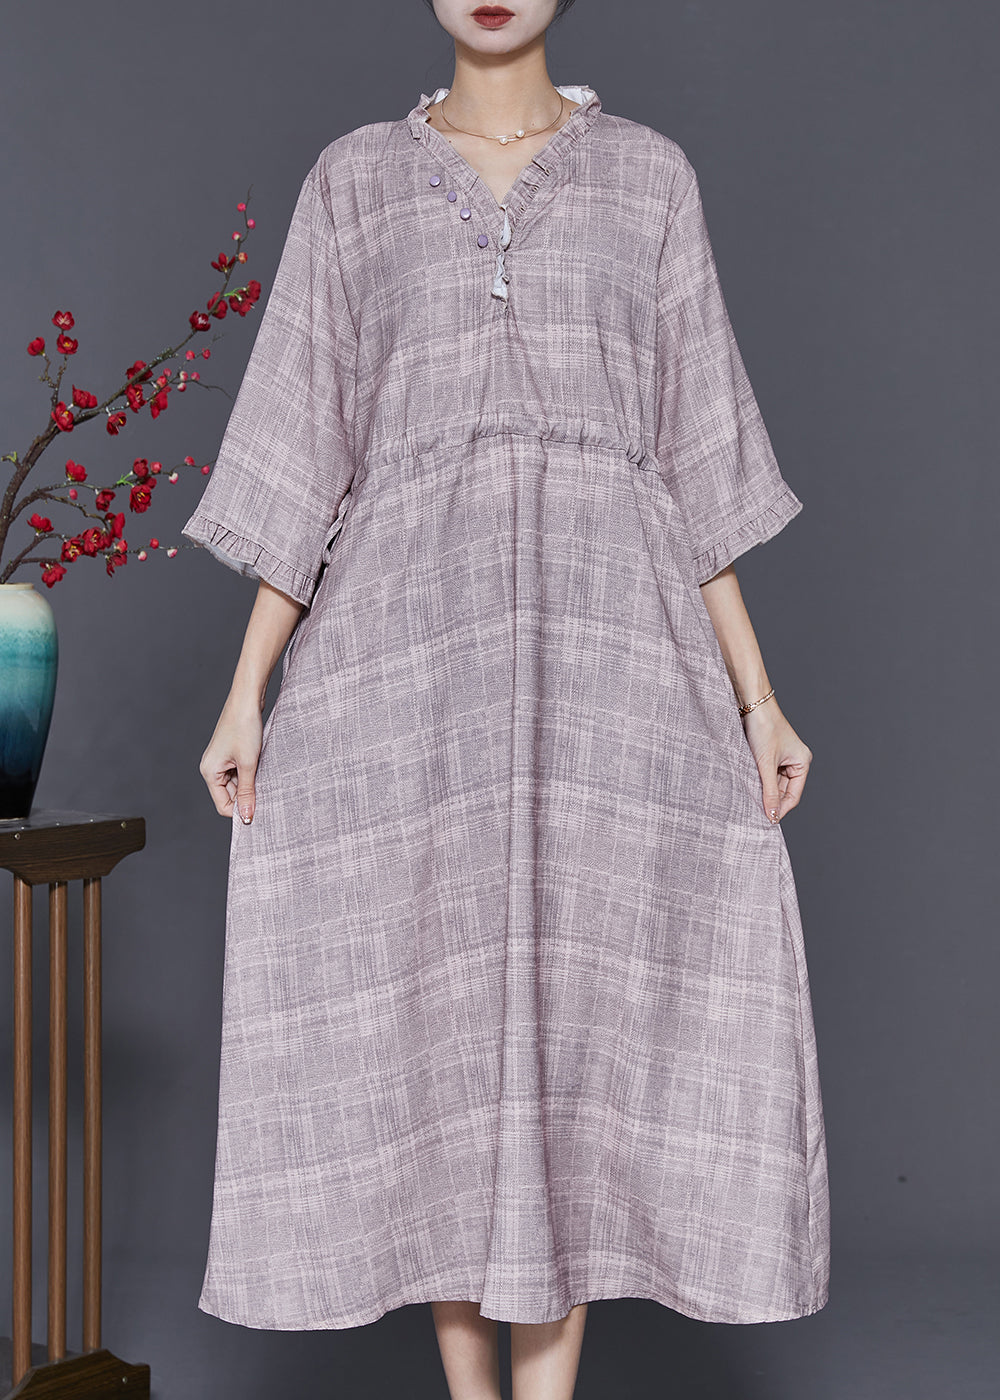 French Grey Ruffled Plaid Drawstring Cotton Long Dress Summer